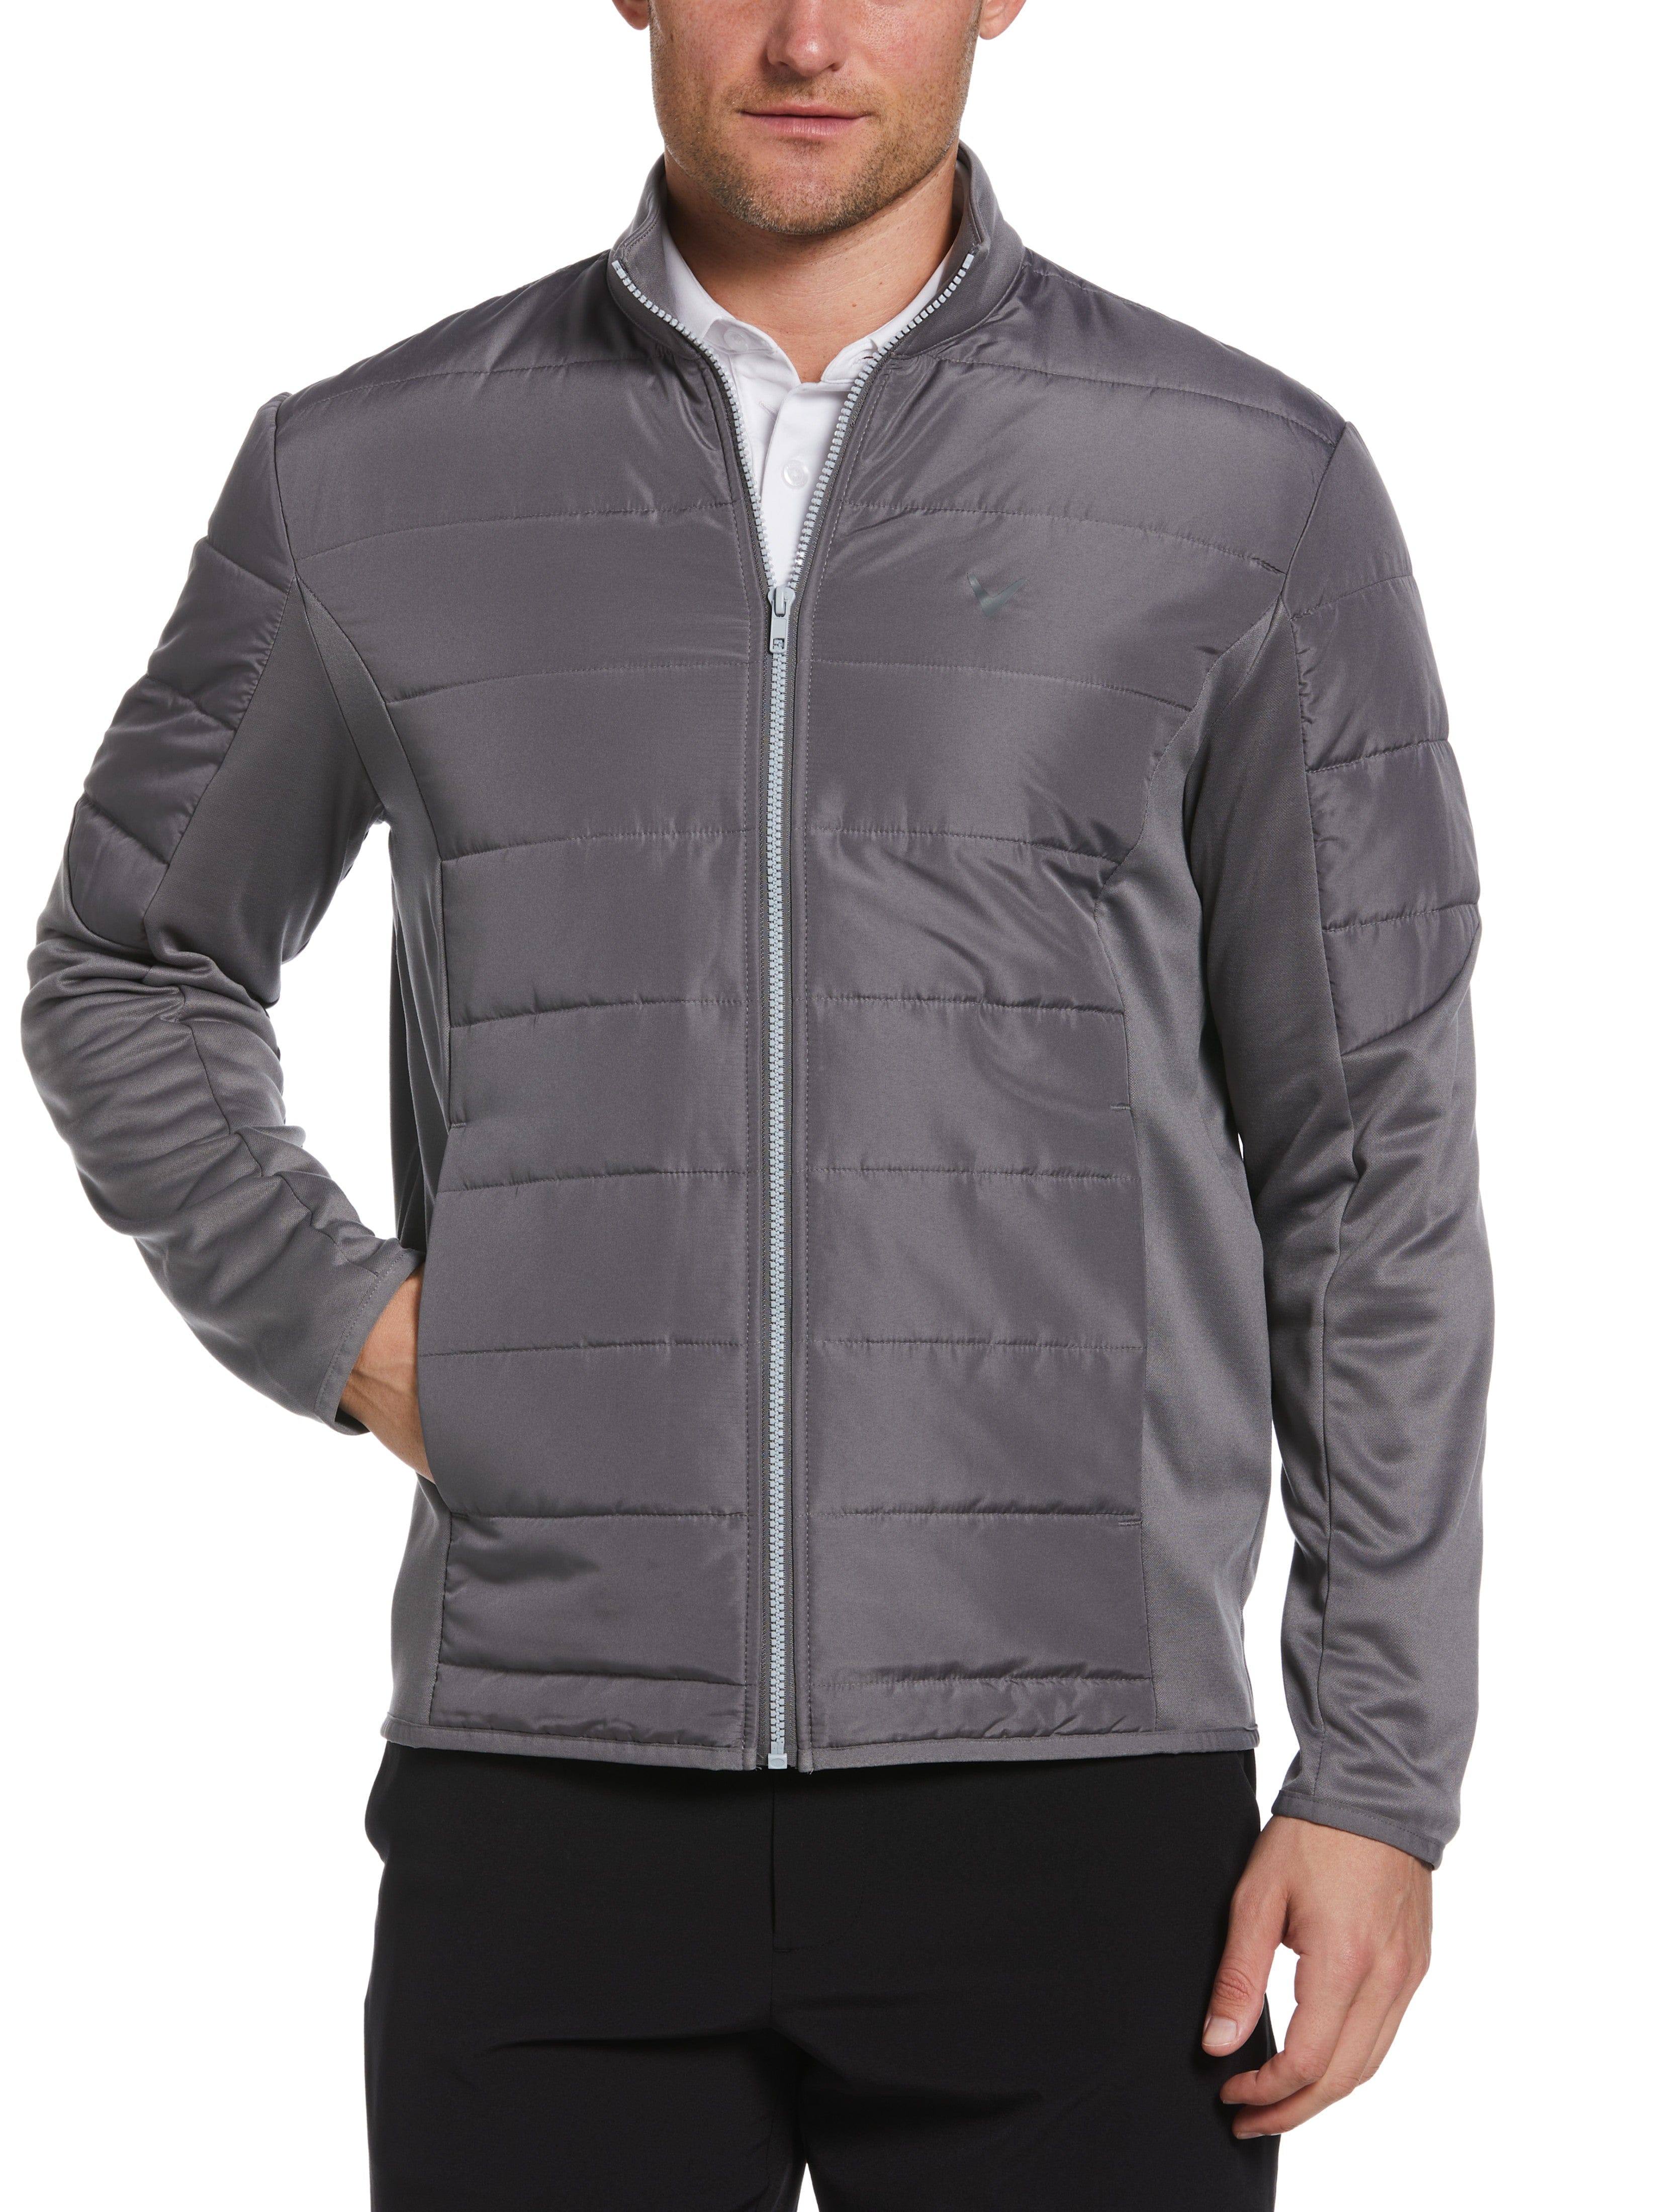 Callaway Apparel Mens Hybrid Performance Puffer Jacket Top, Size XL, Quiet Shade Gray, 100% Polyester | Golf Apparel Shop